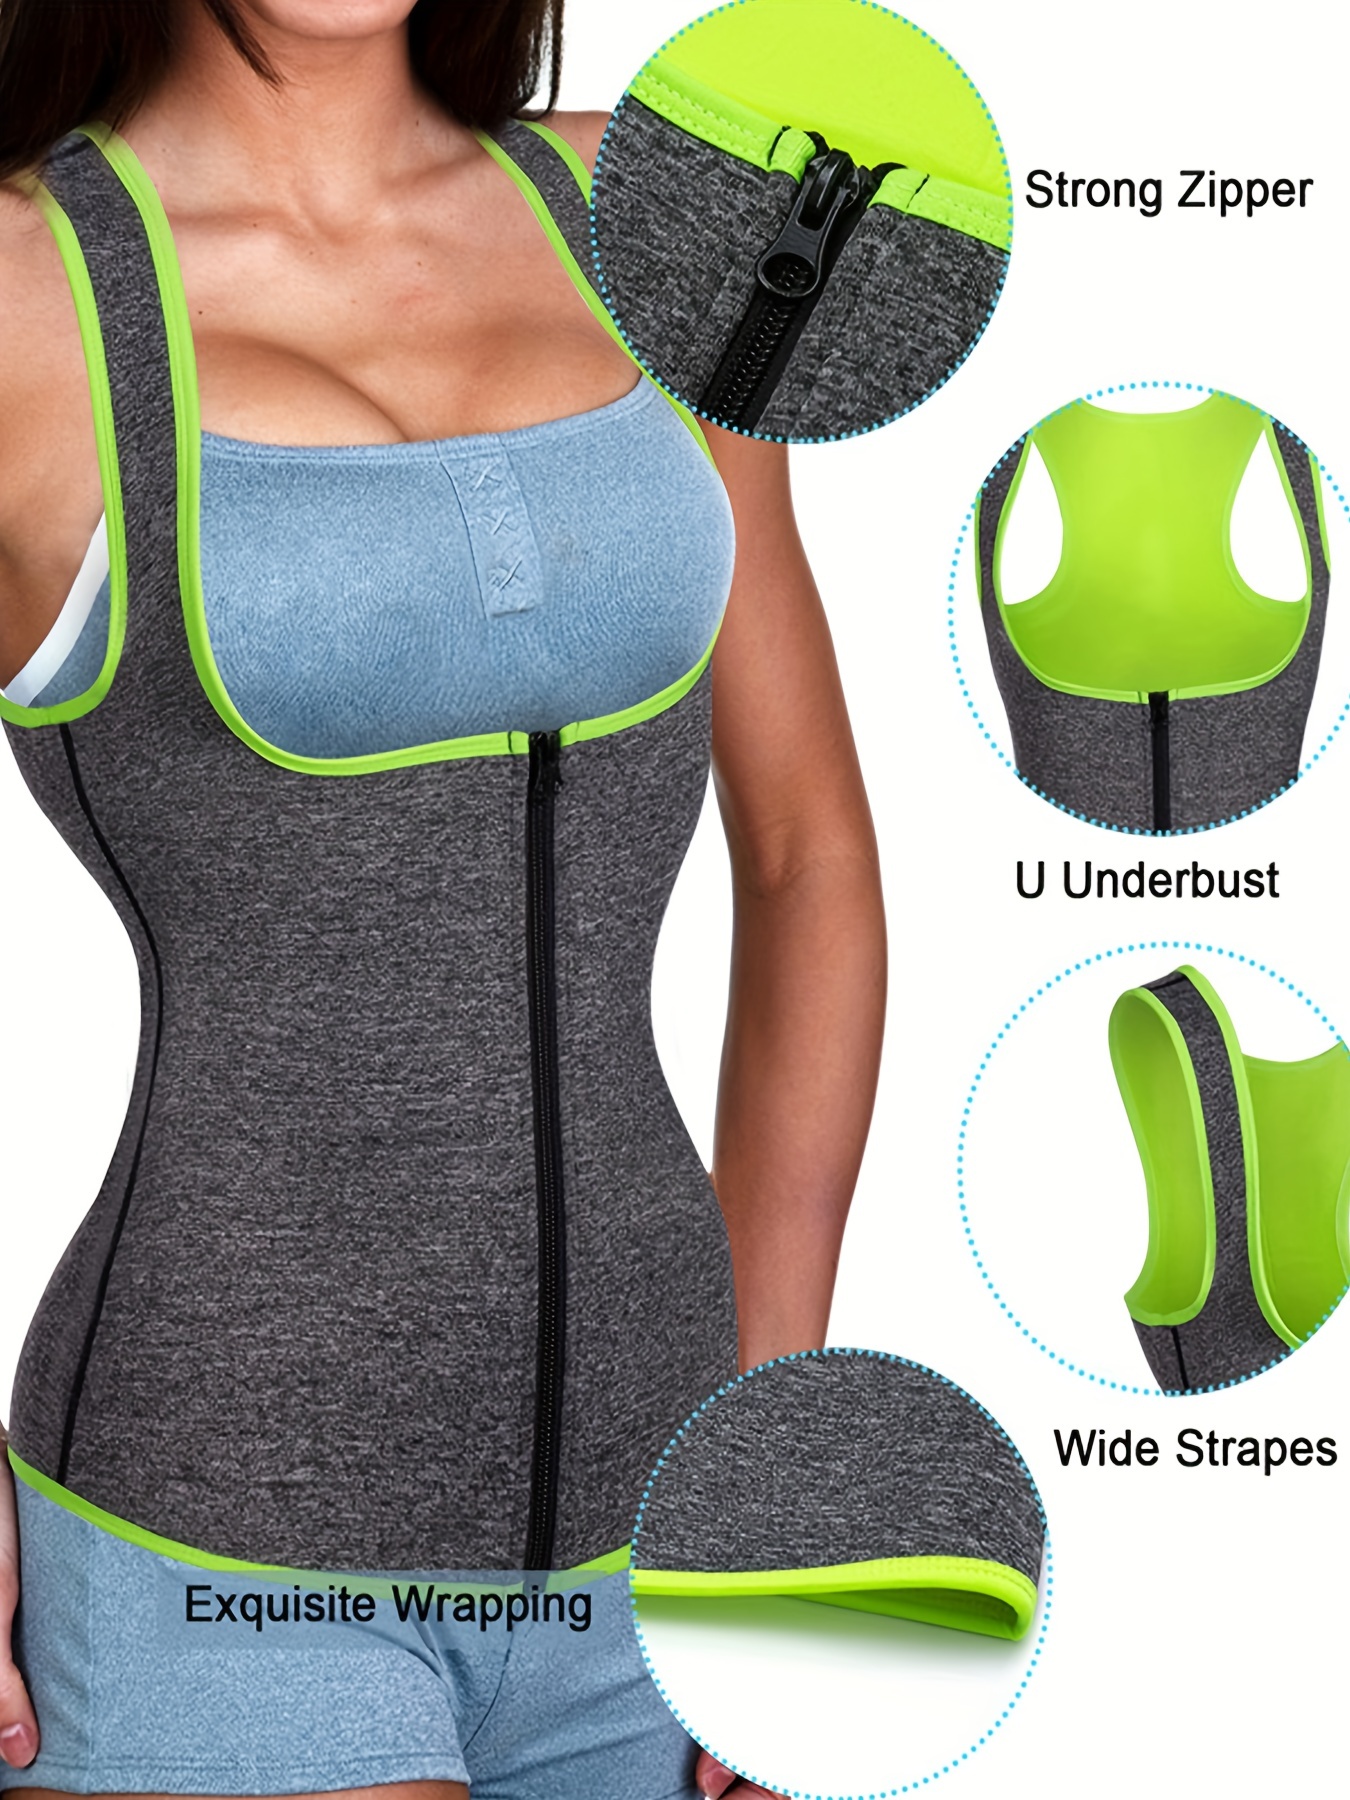 Sauna Suit for Women Waist Trainer Vest for Women Sweat Tank